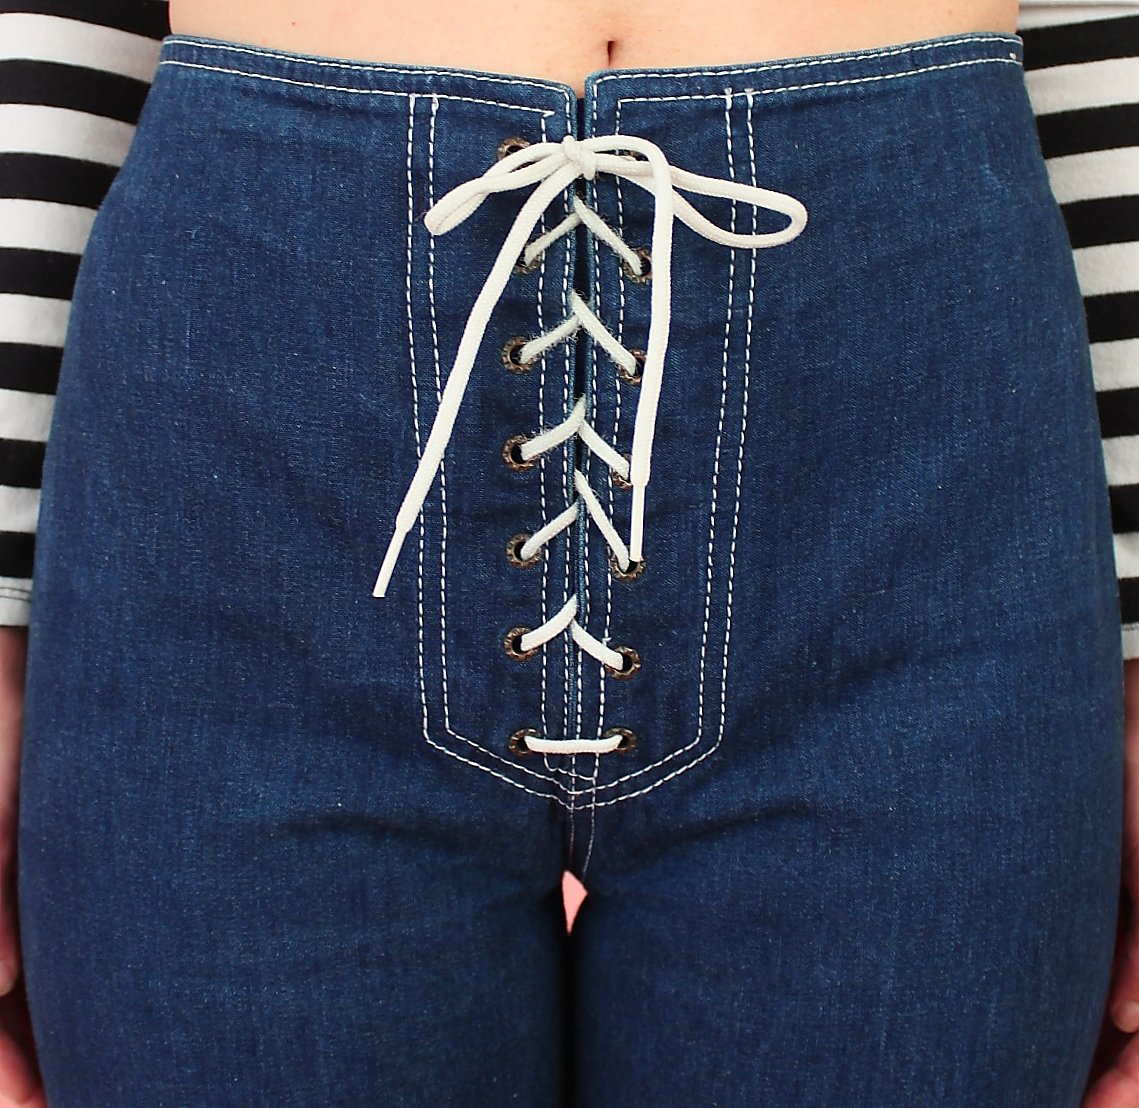 RARE Vintage 70s RAINBOW Striped Bell Bottoms Jeans // Serape Patchwork  Detail! — Hellhound Vintage